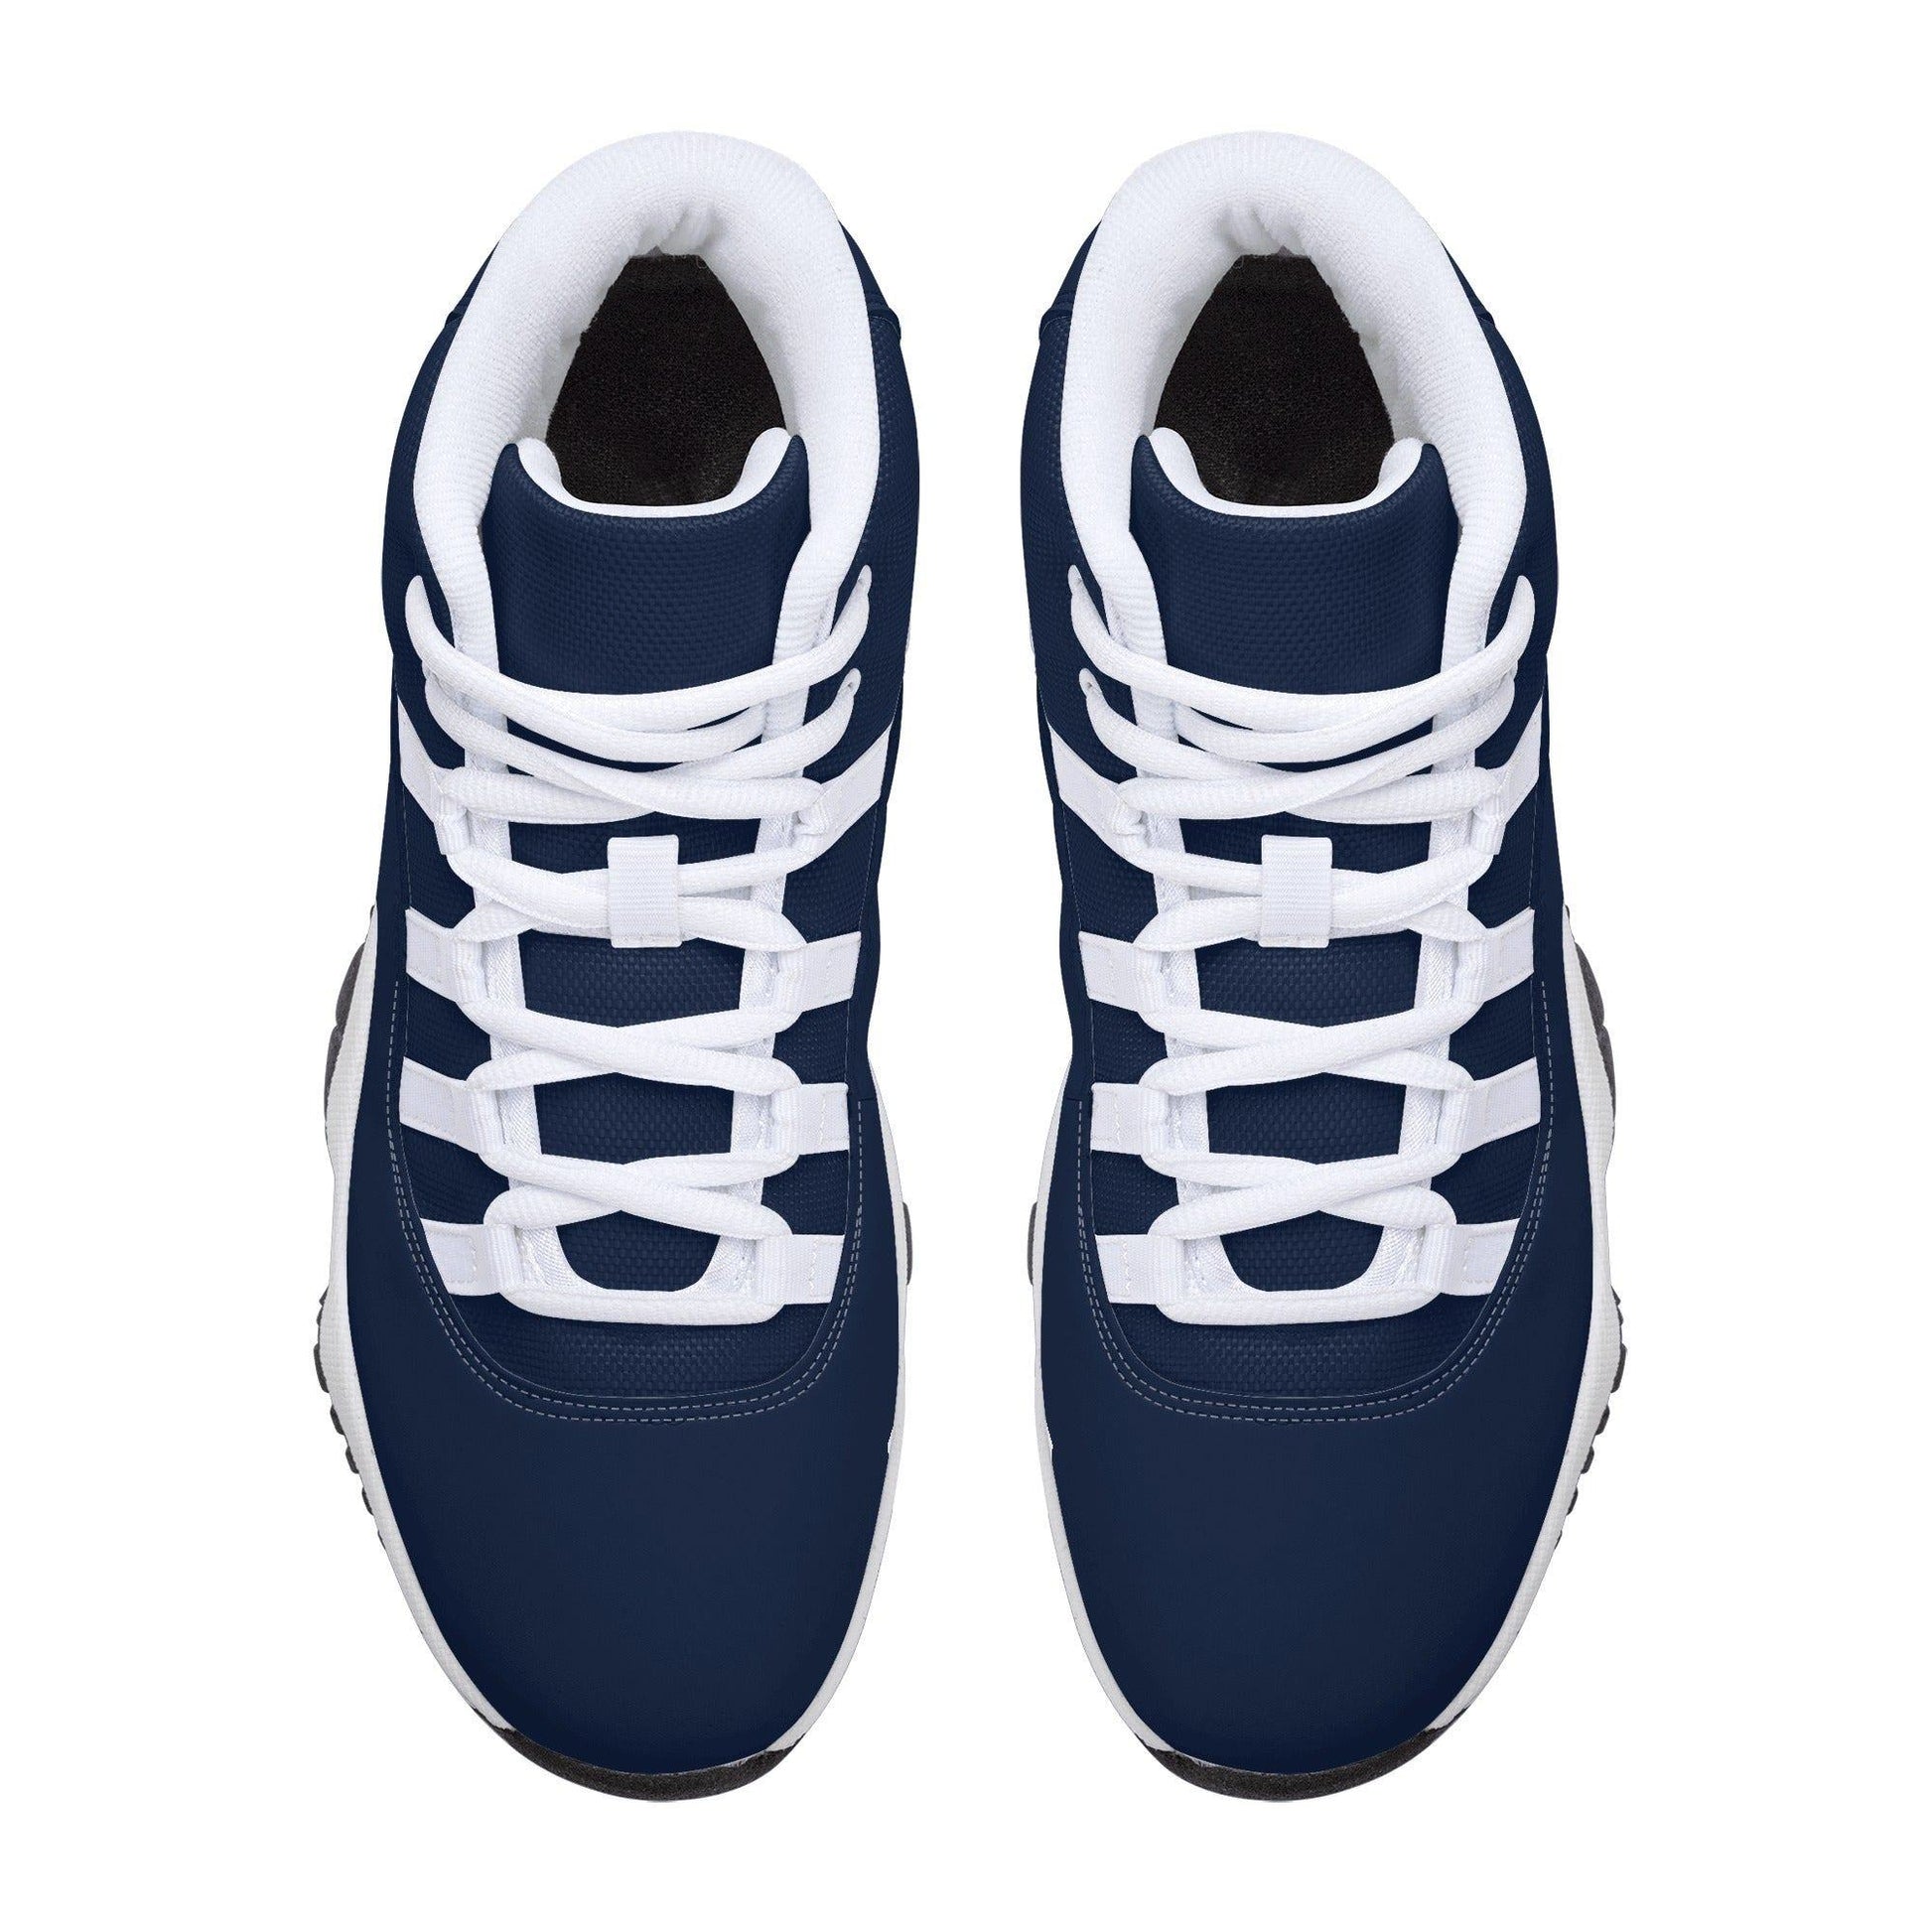 Navy High Top Damen Sneaker -- Navy High Top Damen Sneaker - undefined Sneaker | JLR Design